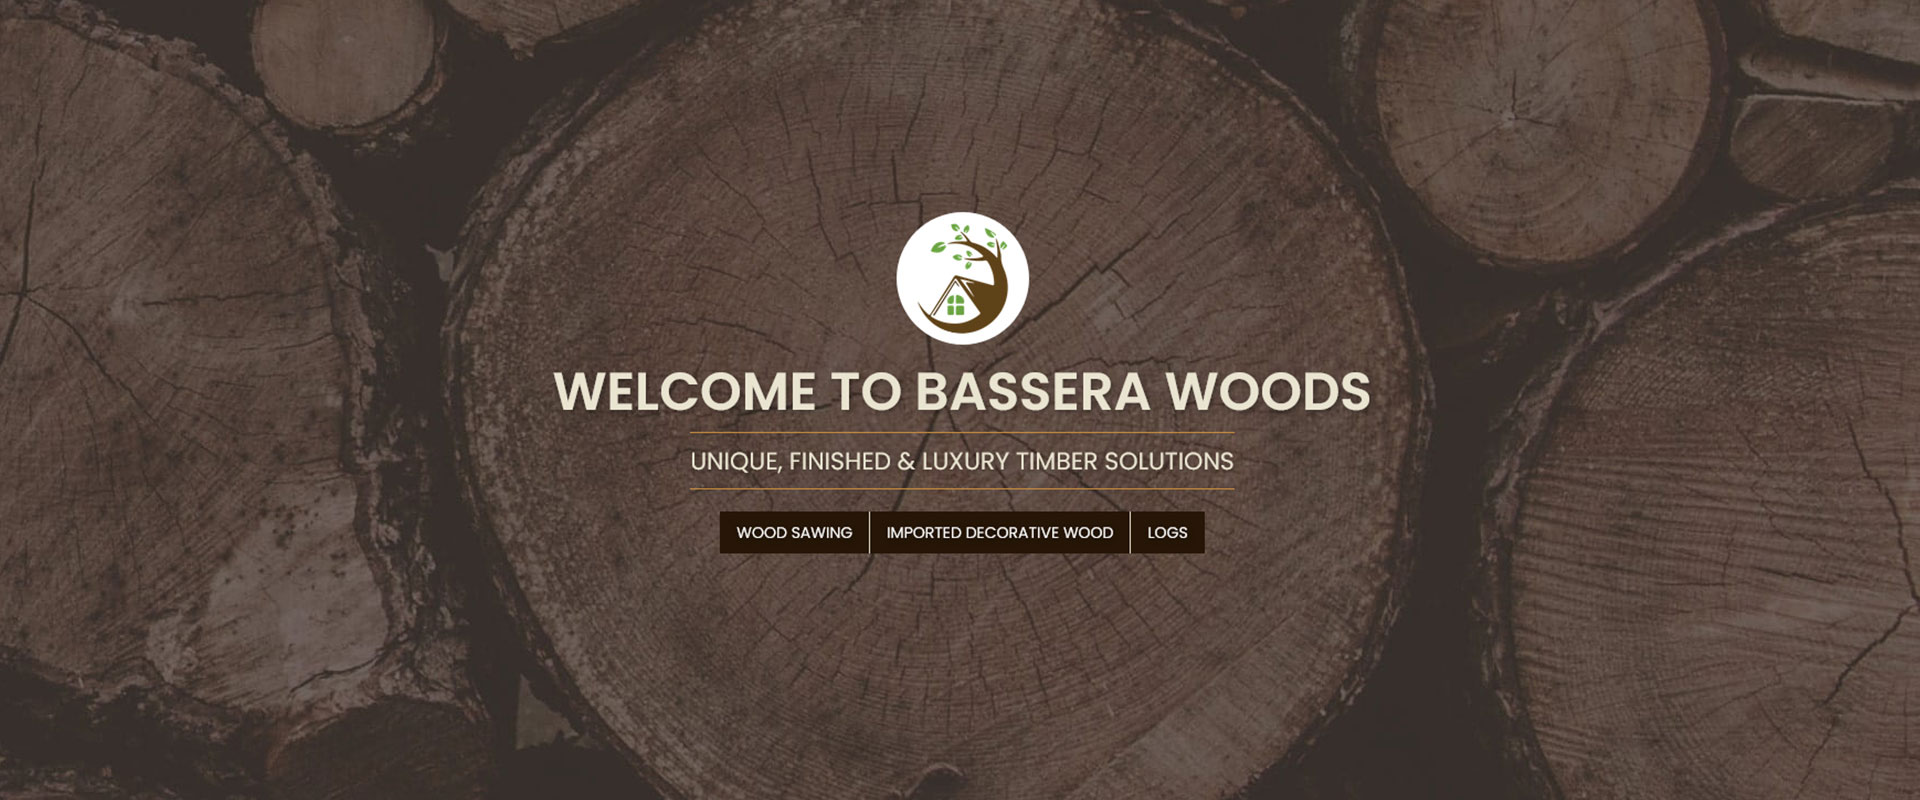 Basserra Woods